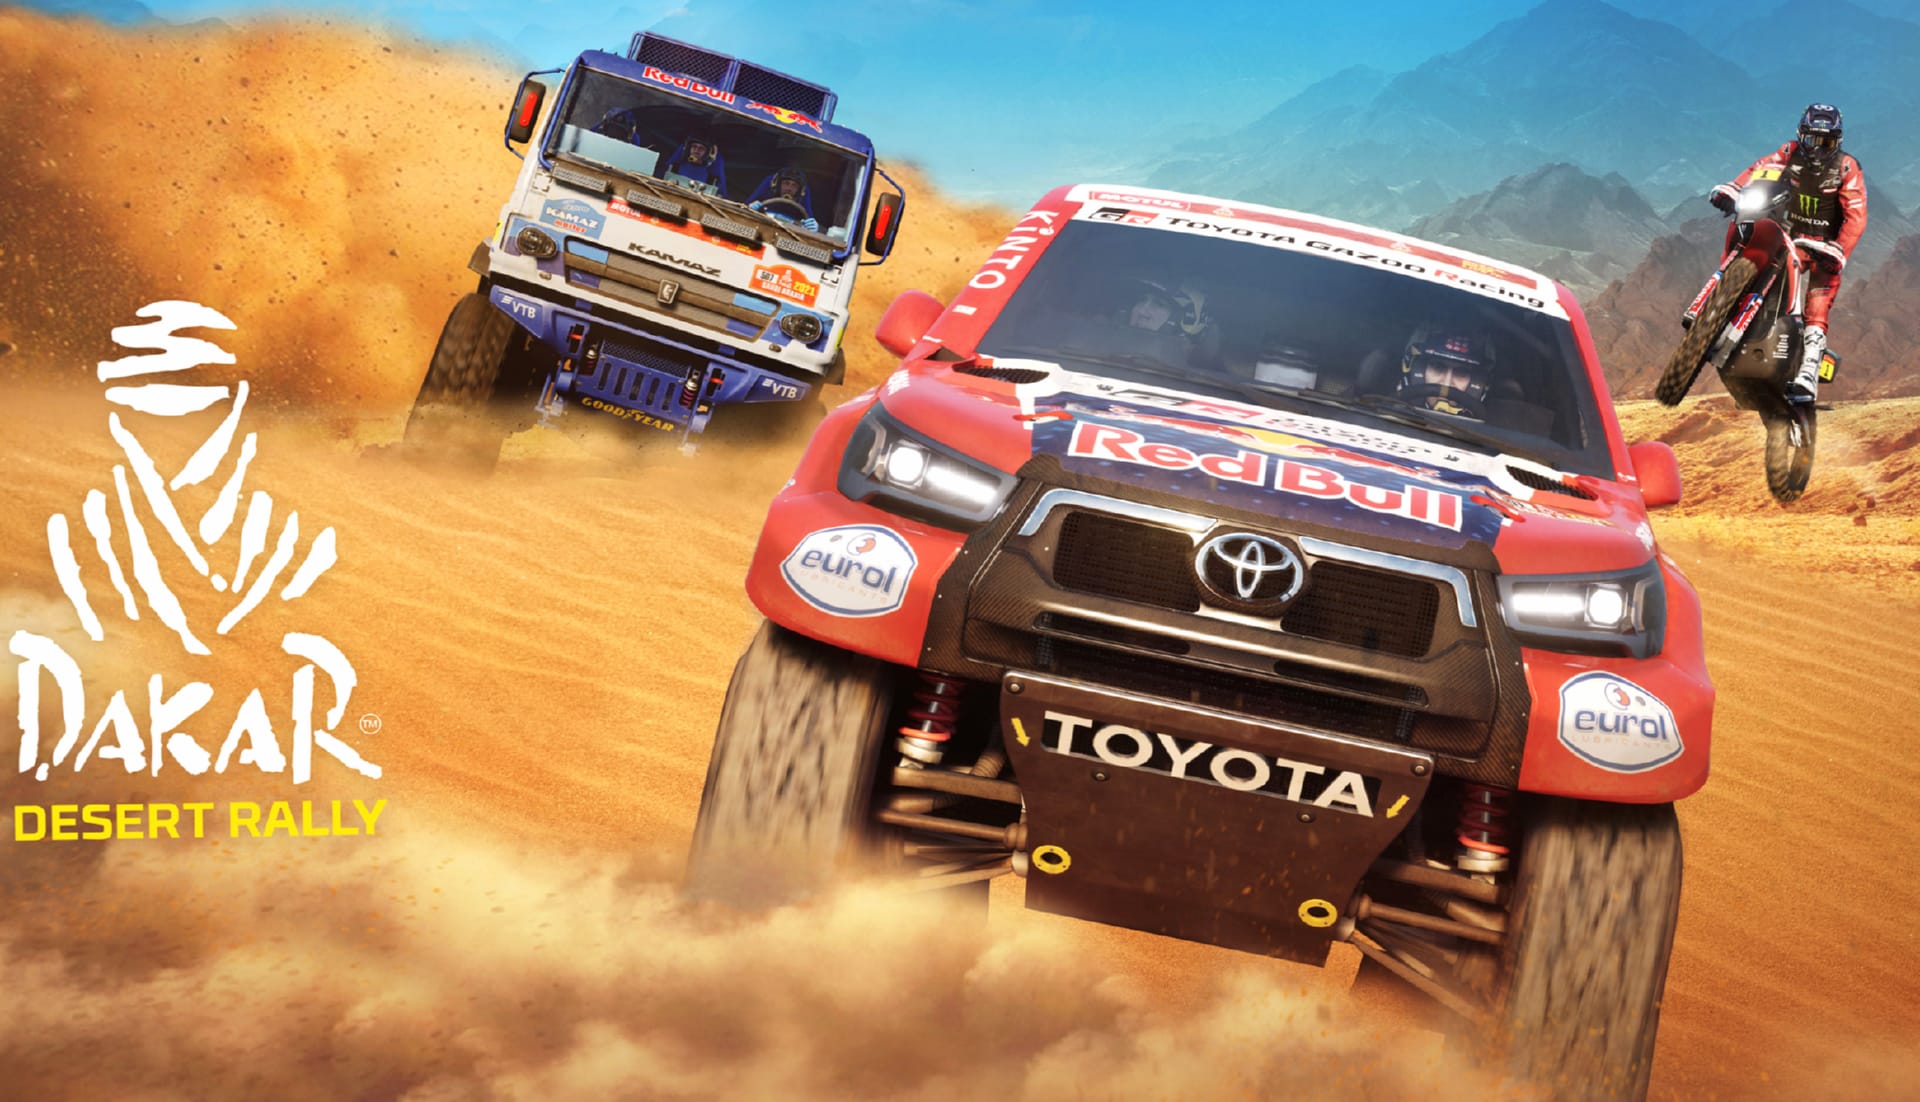 Dakar Desert Rally at 640 x 1136 iPhone 5 size wallpapers HD quality